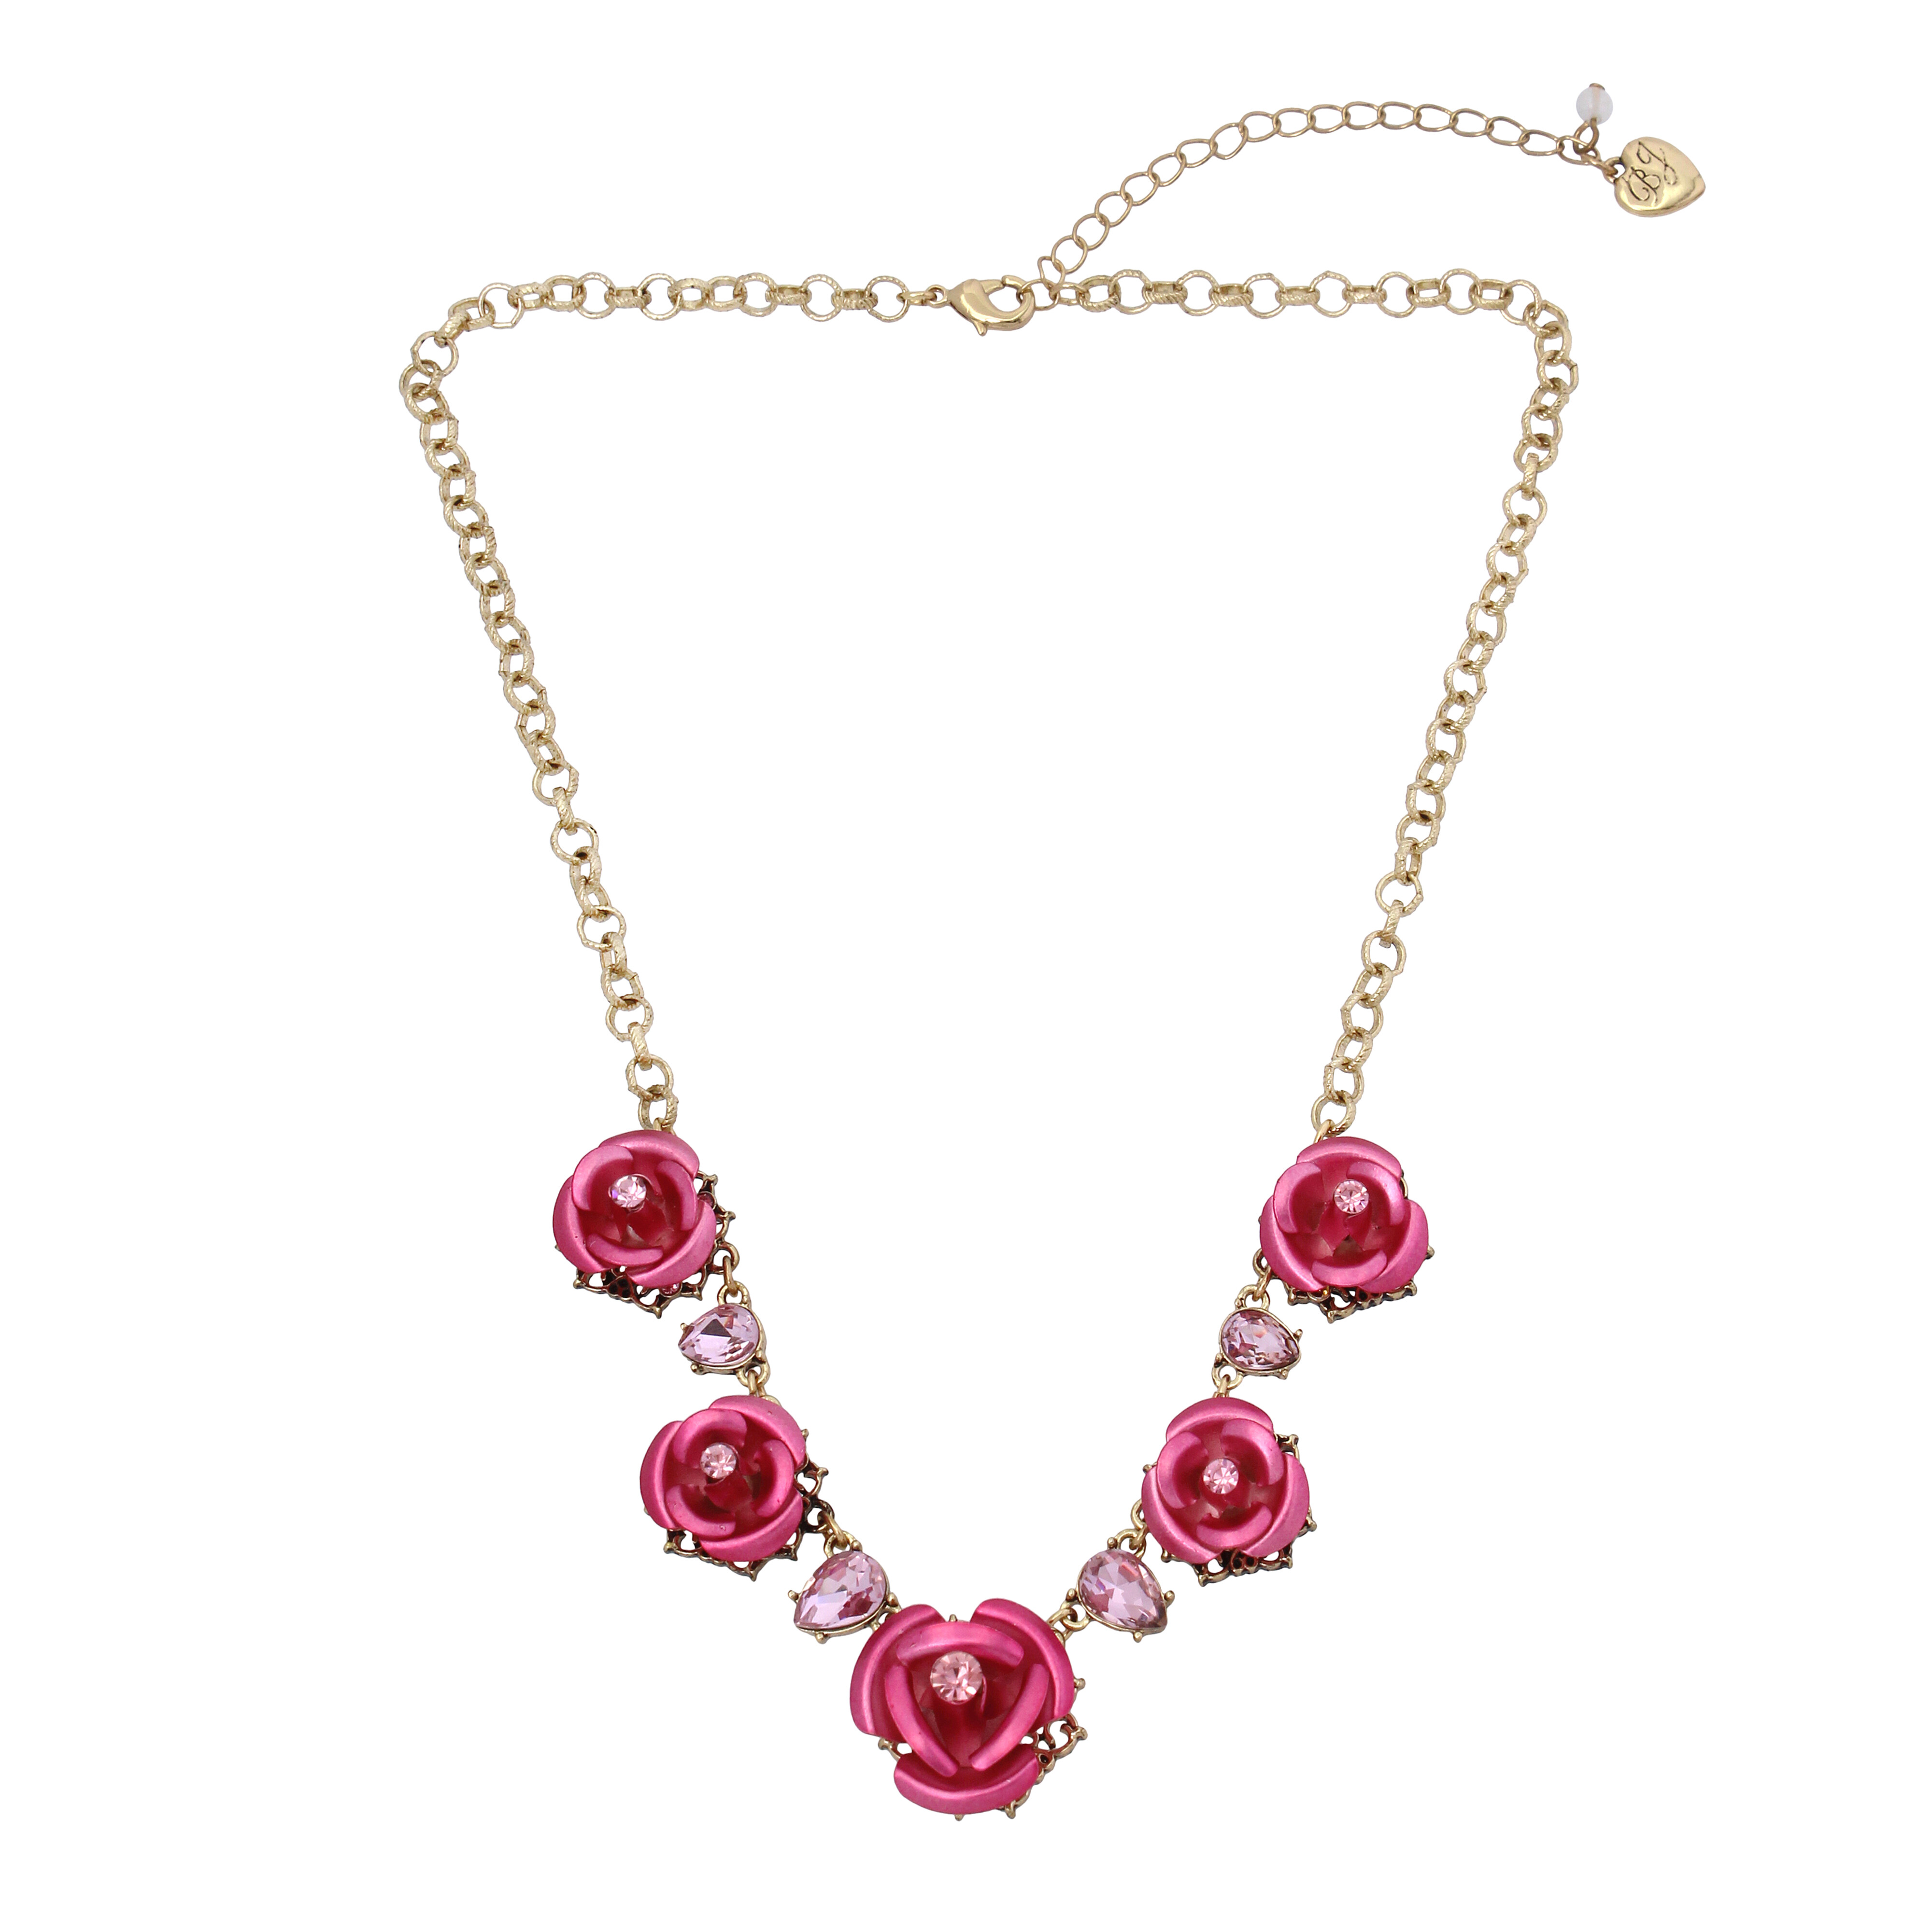 Bijuterii Femei Betsey Johnson Rose Frontal Necklace Light Pink